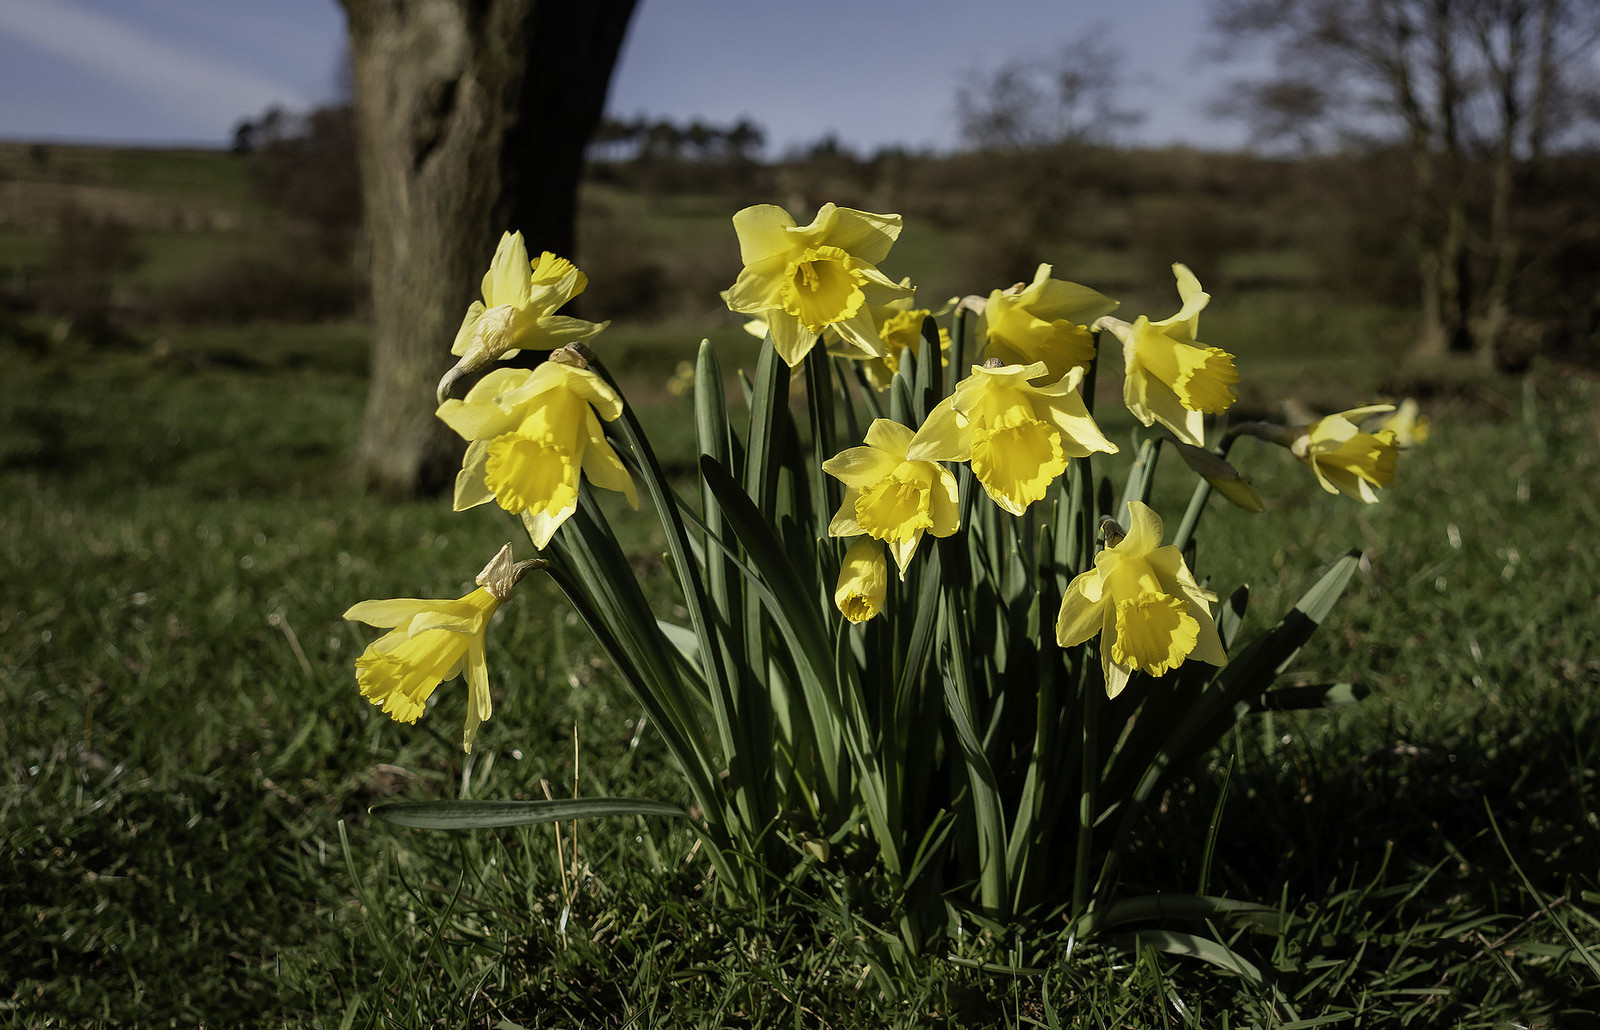 Wild daffodil test upload (prophoto version from Adobe Lightroom)